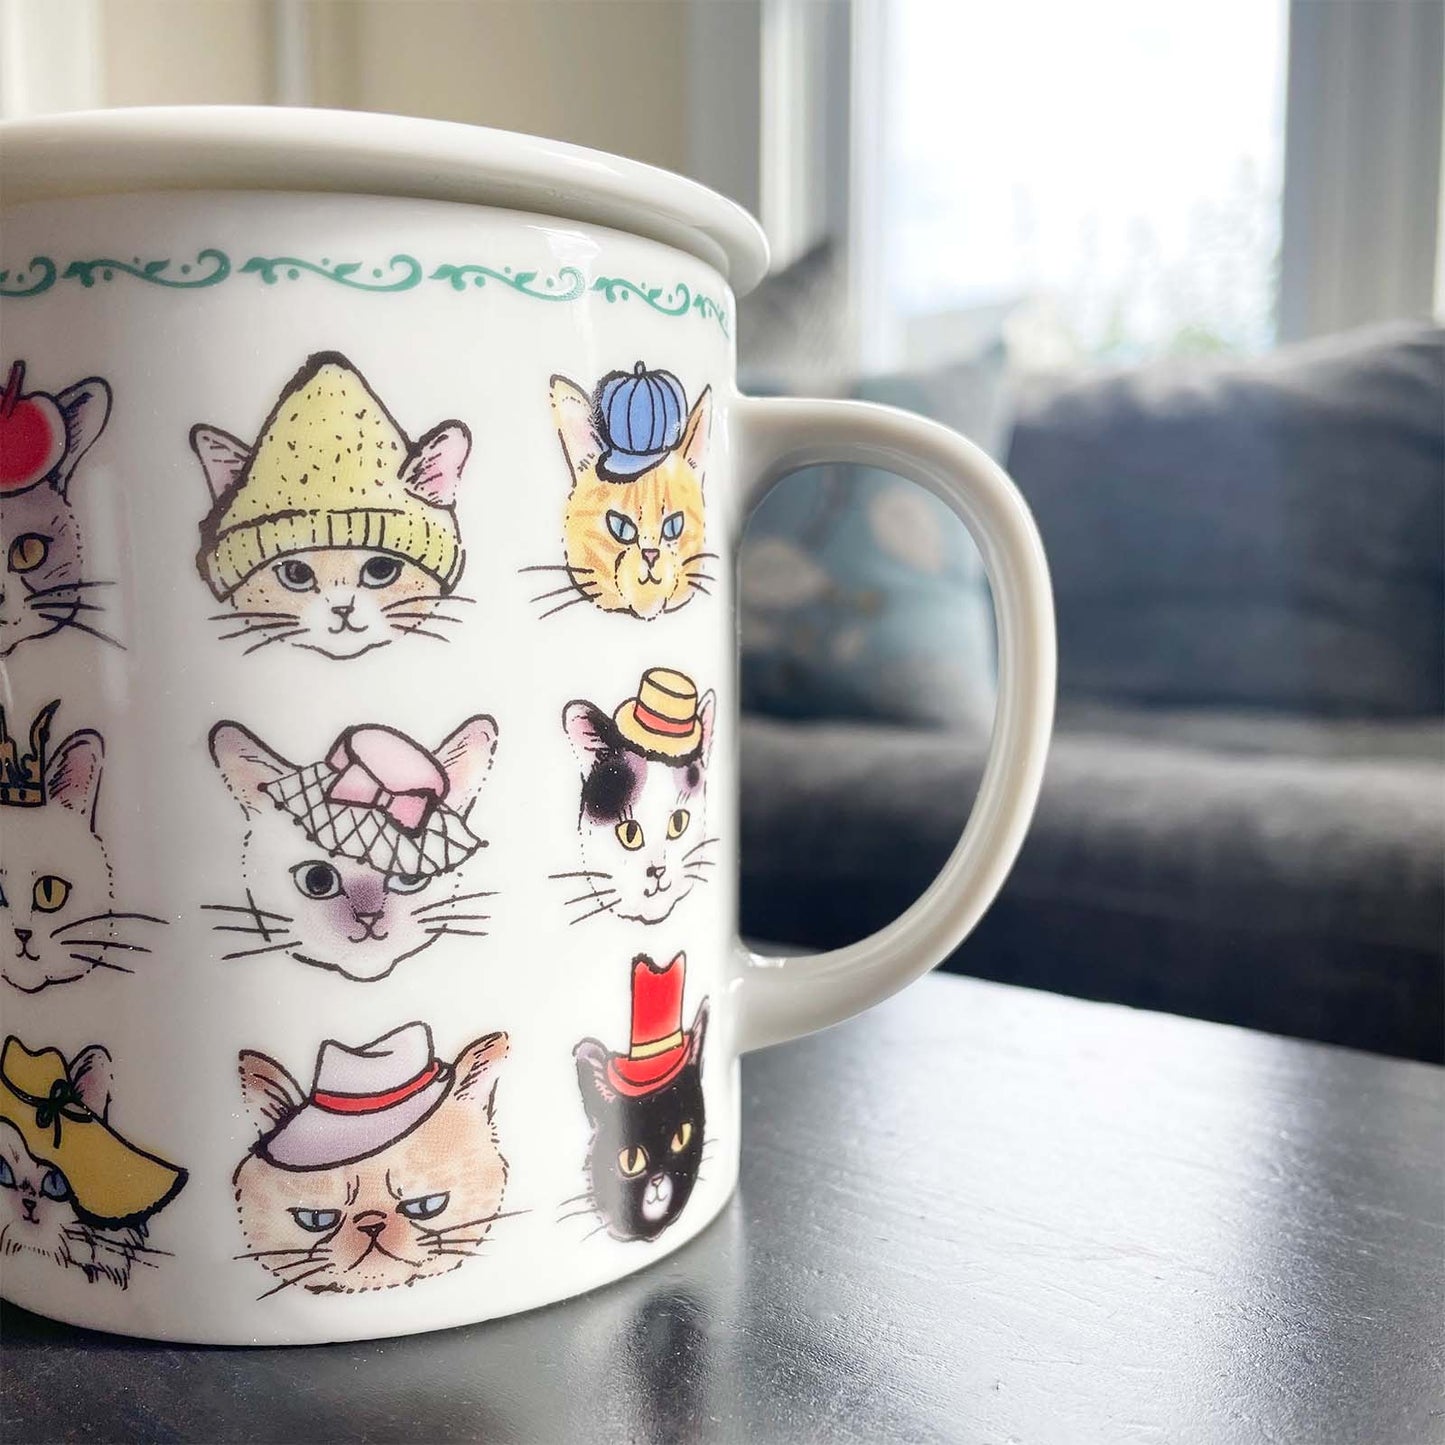 Cats Wearing Hats Mug_Lifestyle_Dining_Japanese Home